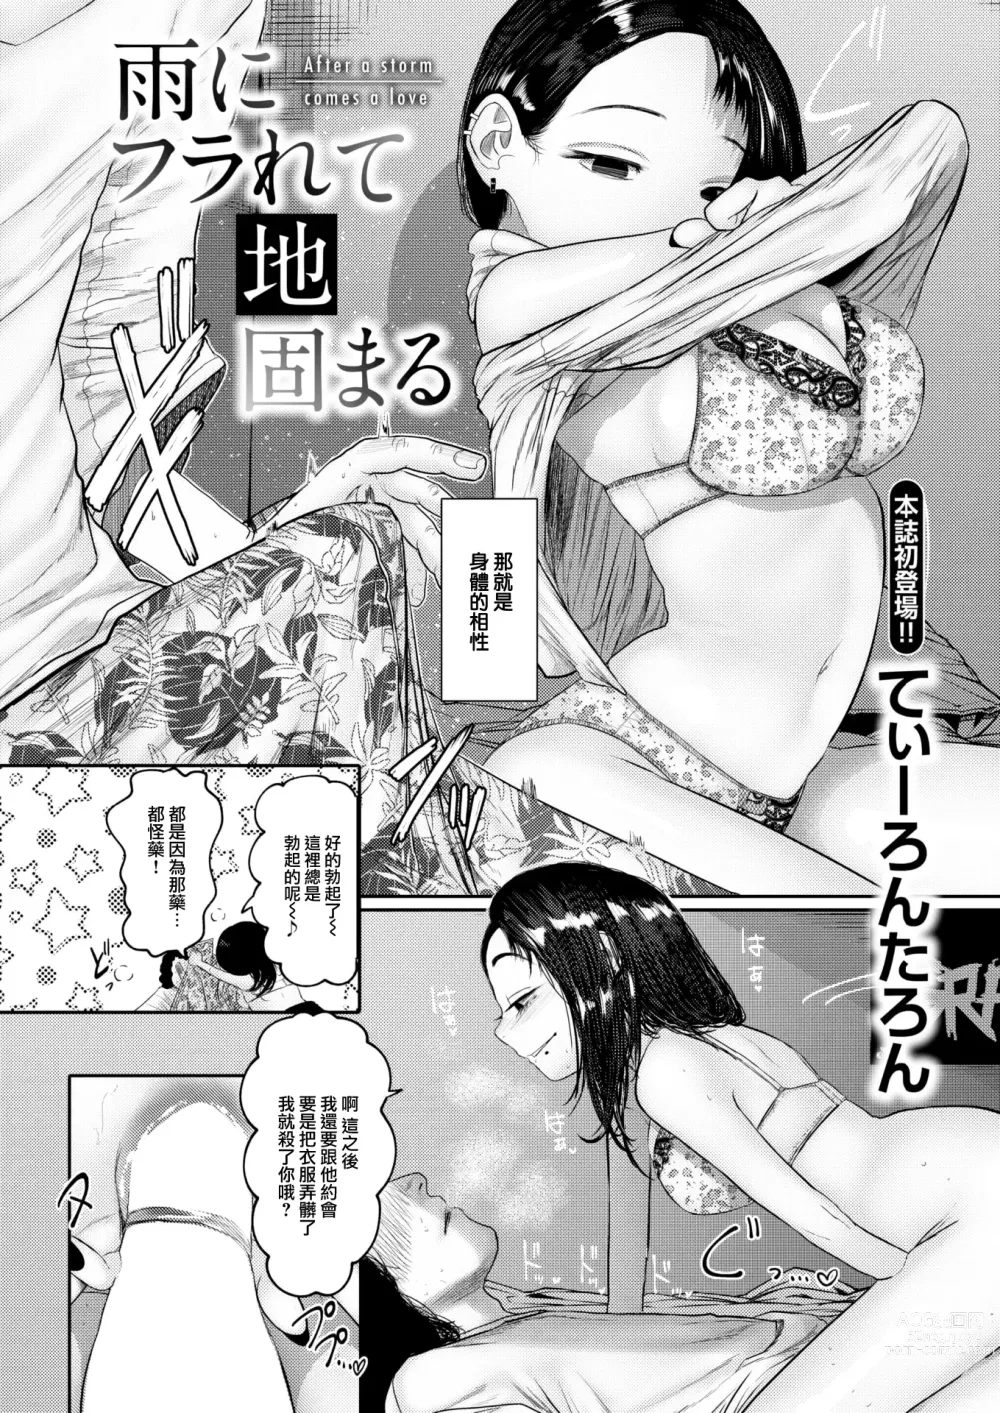 Page 4 of manga Ame ni Furarete Ji Katamaru - After a storm comes a love